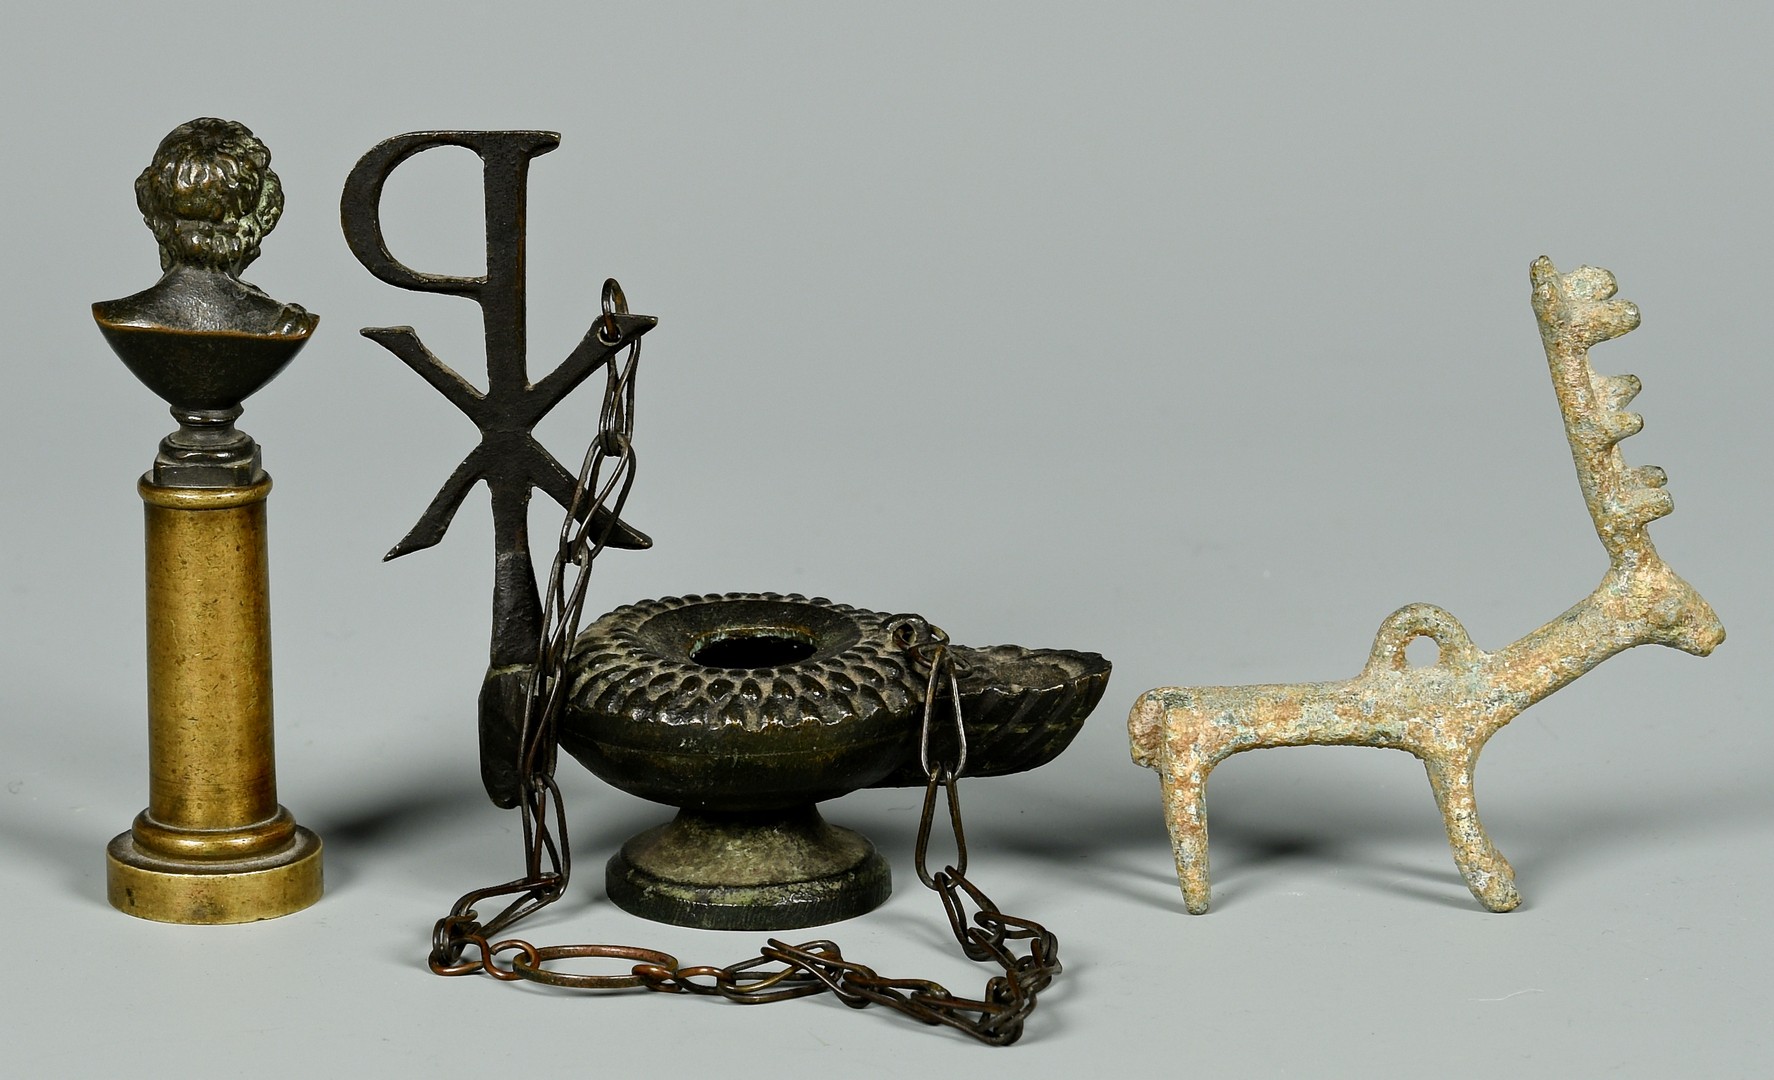 Lot 174: Group of Antique Bronze & Metal Decorative Items,